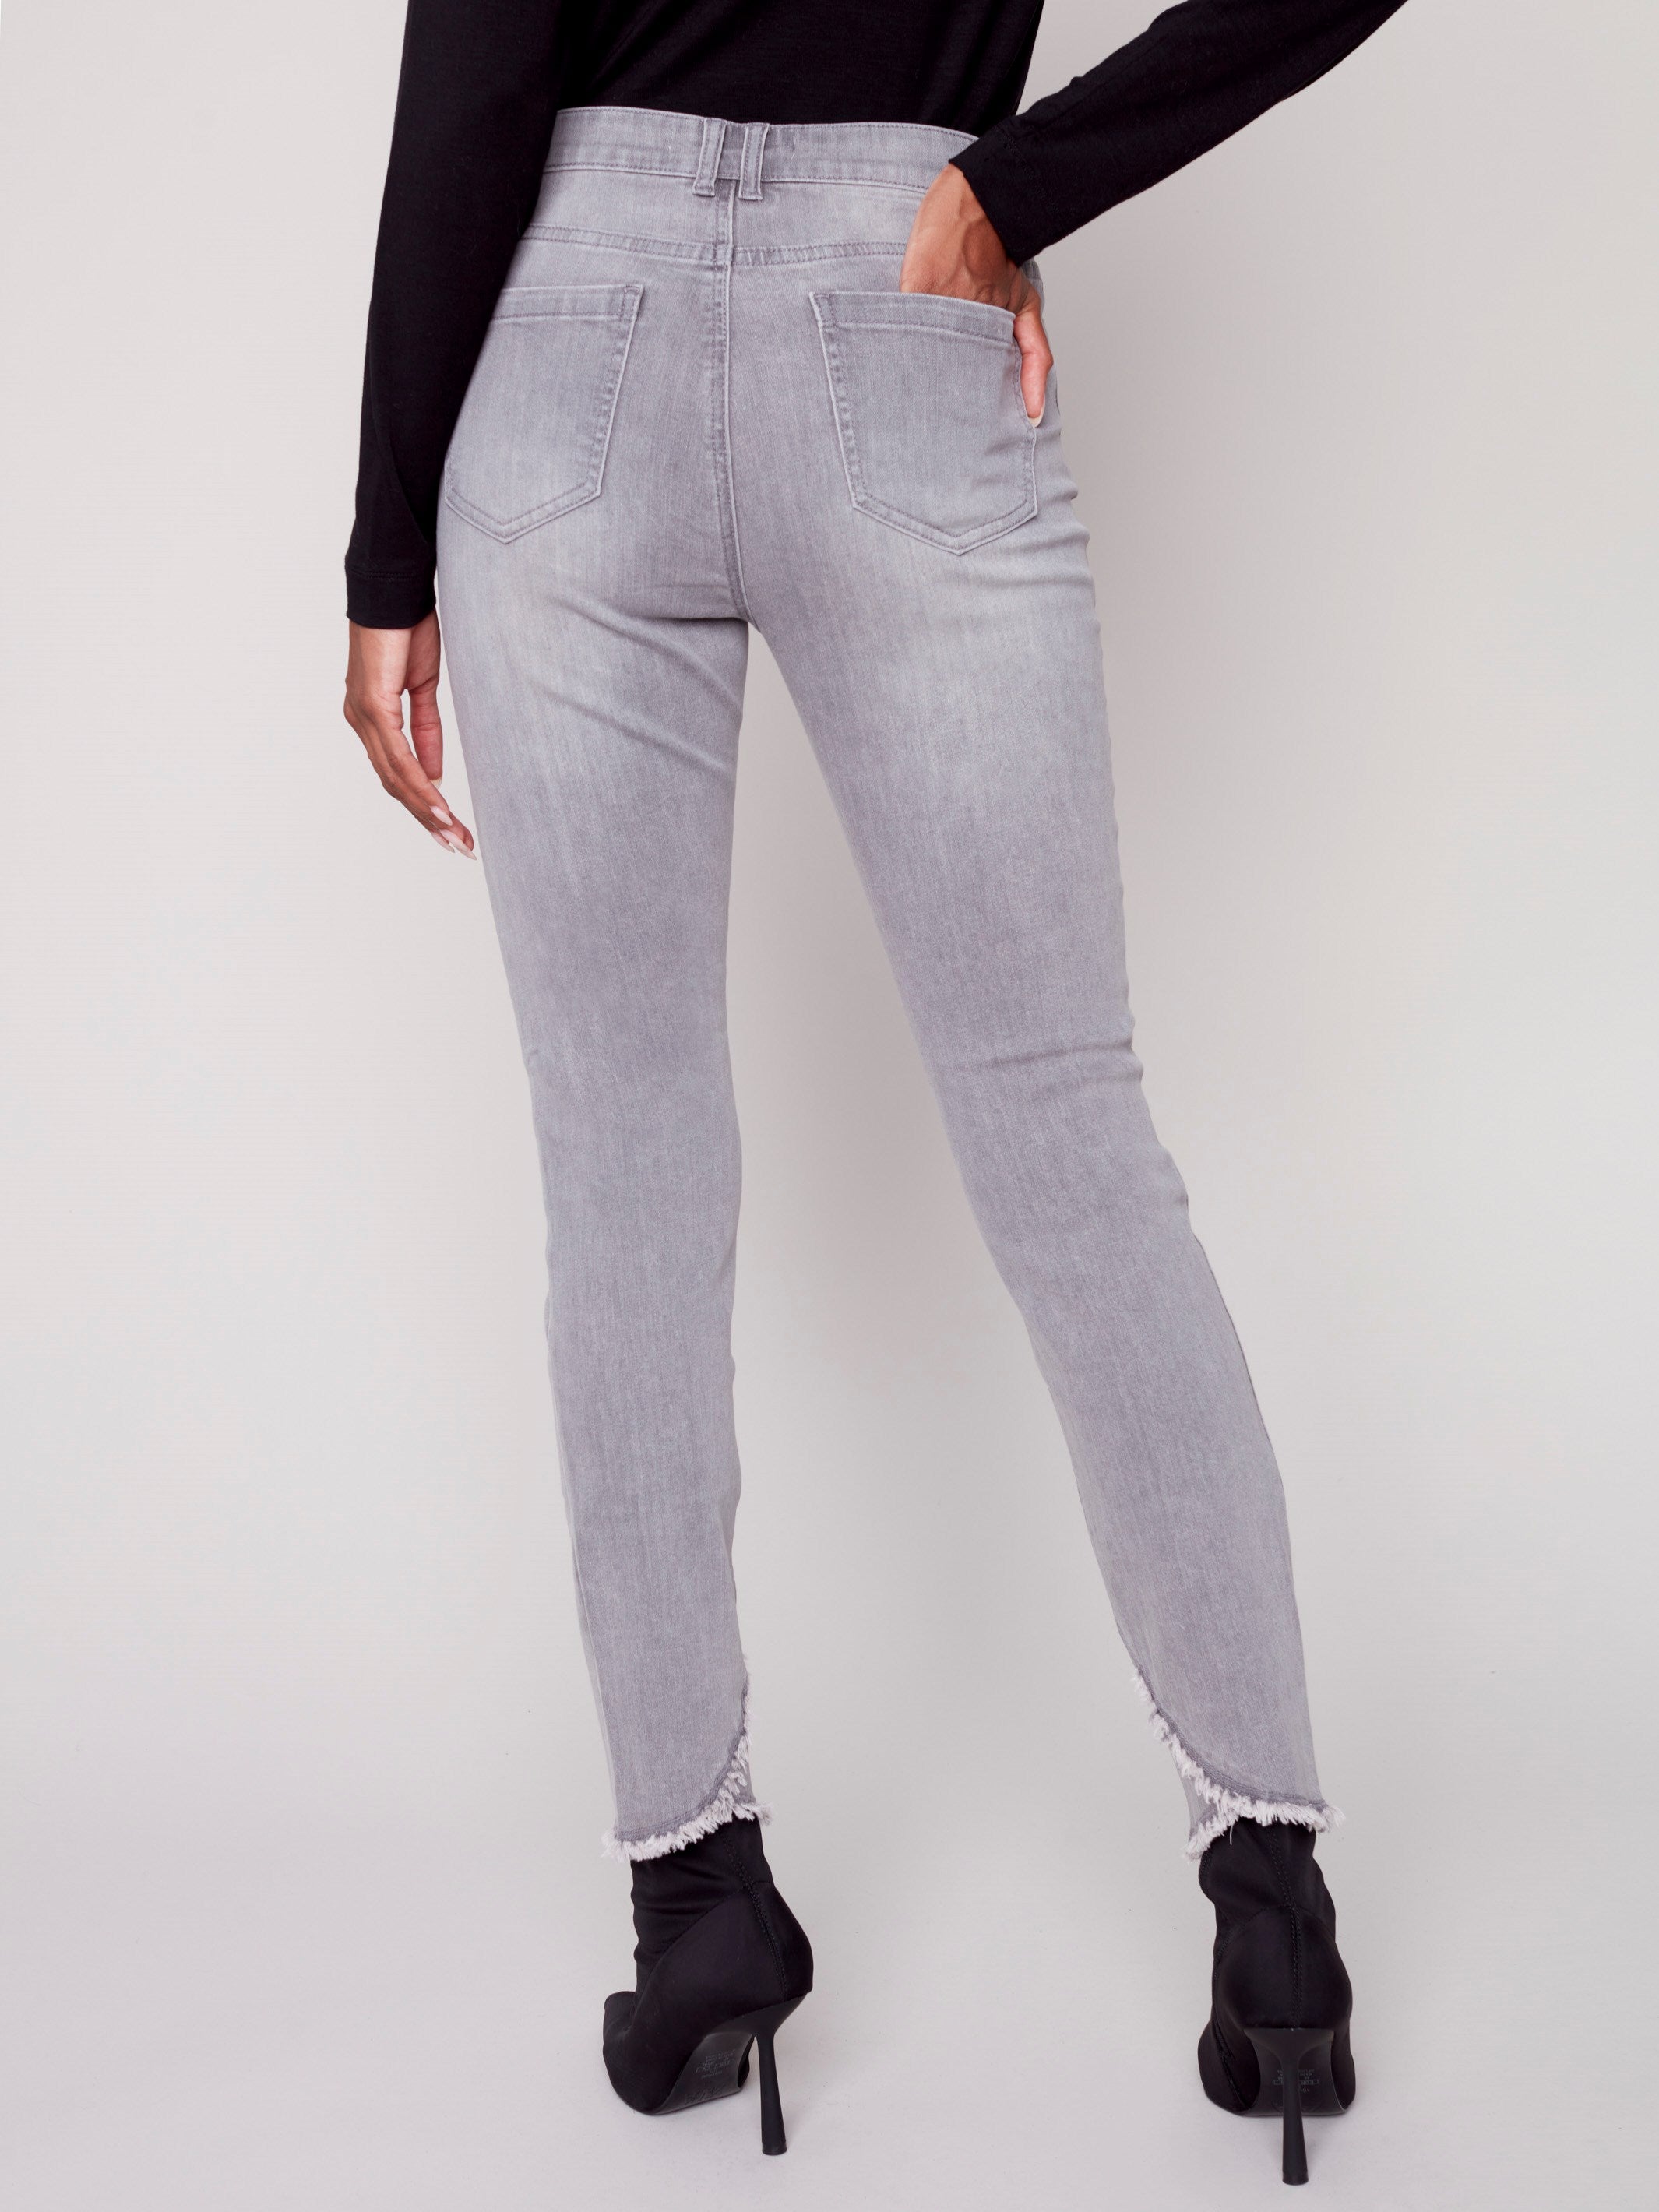 Stretchy Jeans with Tulip Hem - Soft Grey